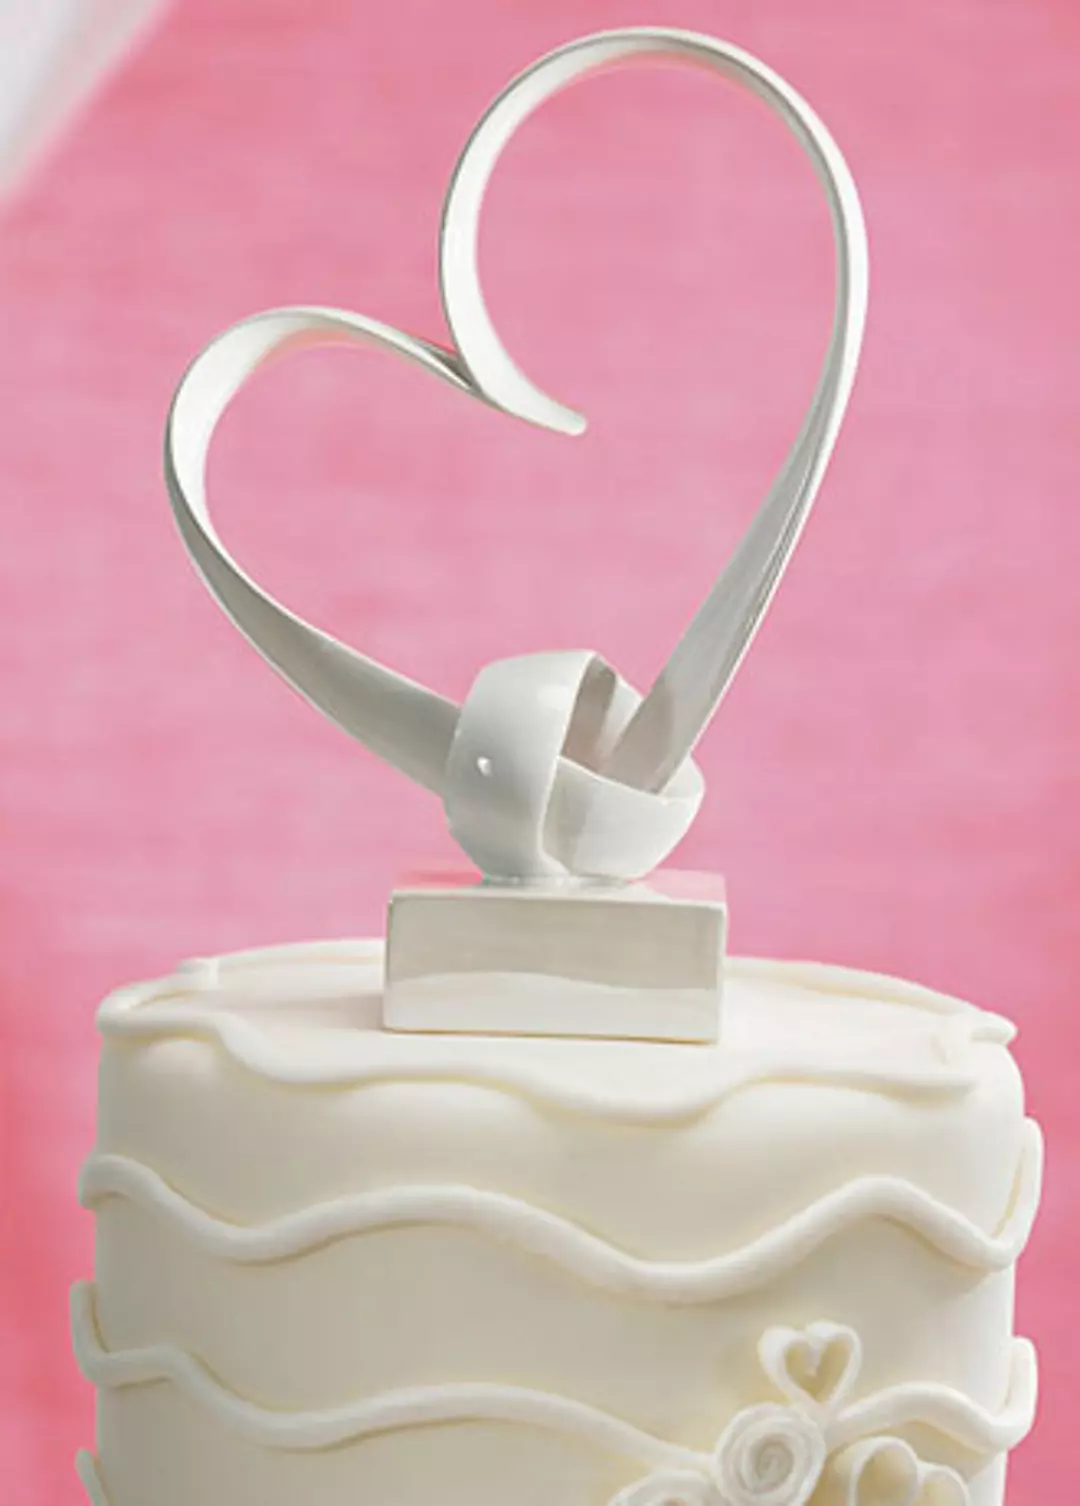 My Love Stylized Heart Cake Topper Image